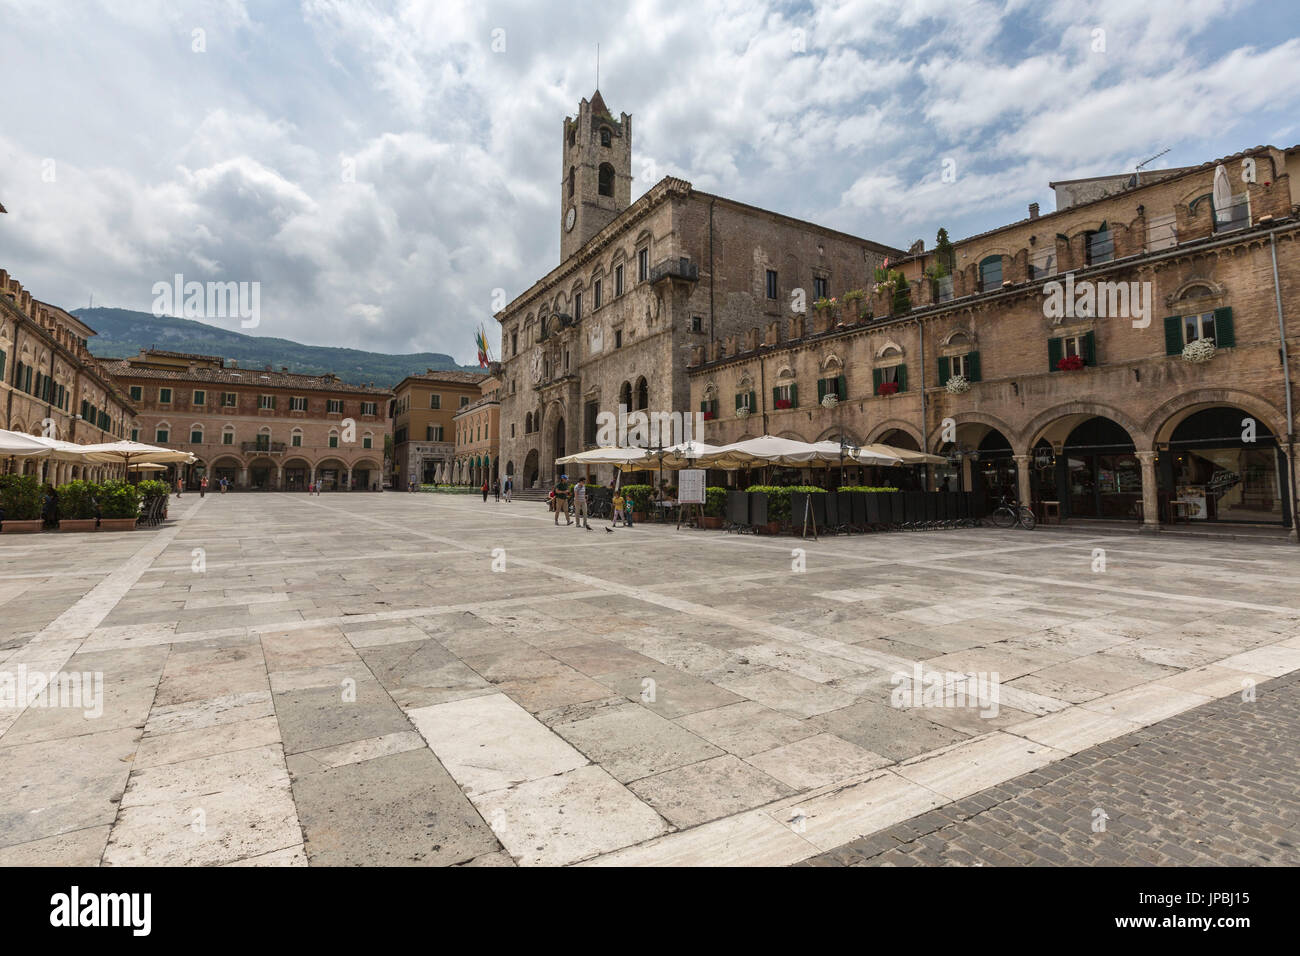 The old arcades frame the historical buildings of Piazza del Popolo Ascoli Piceno Marche Italy Europe Stock Photo